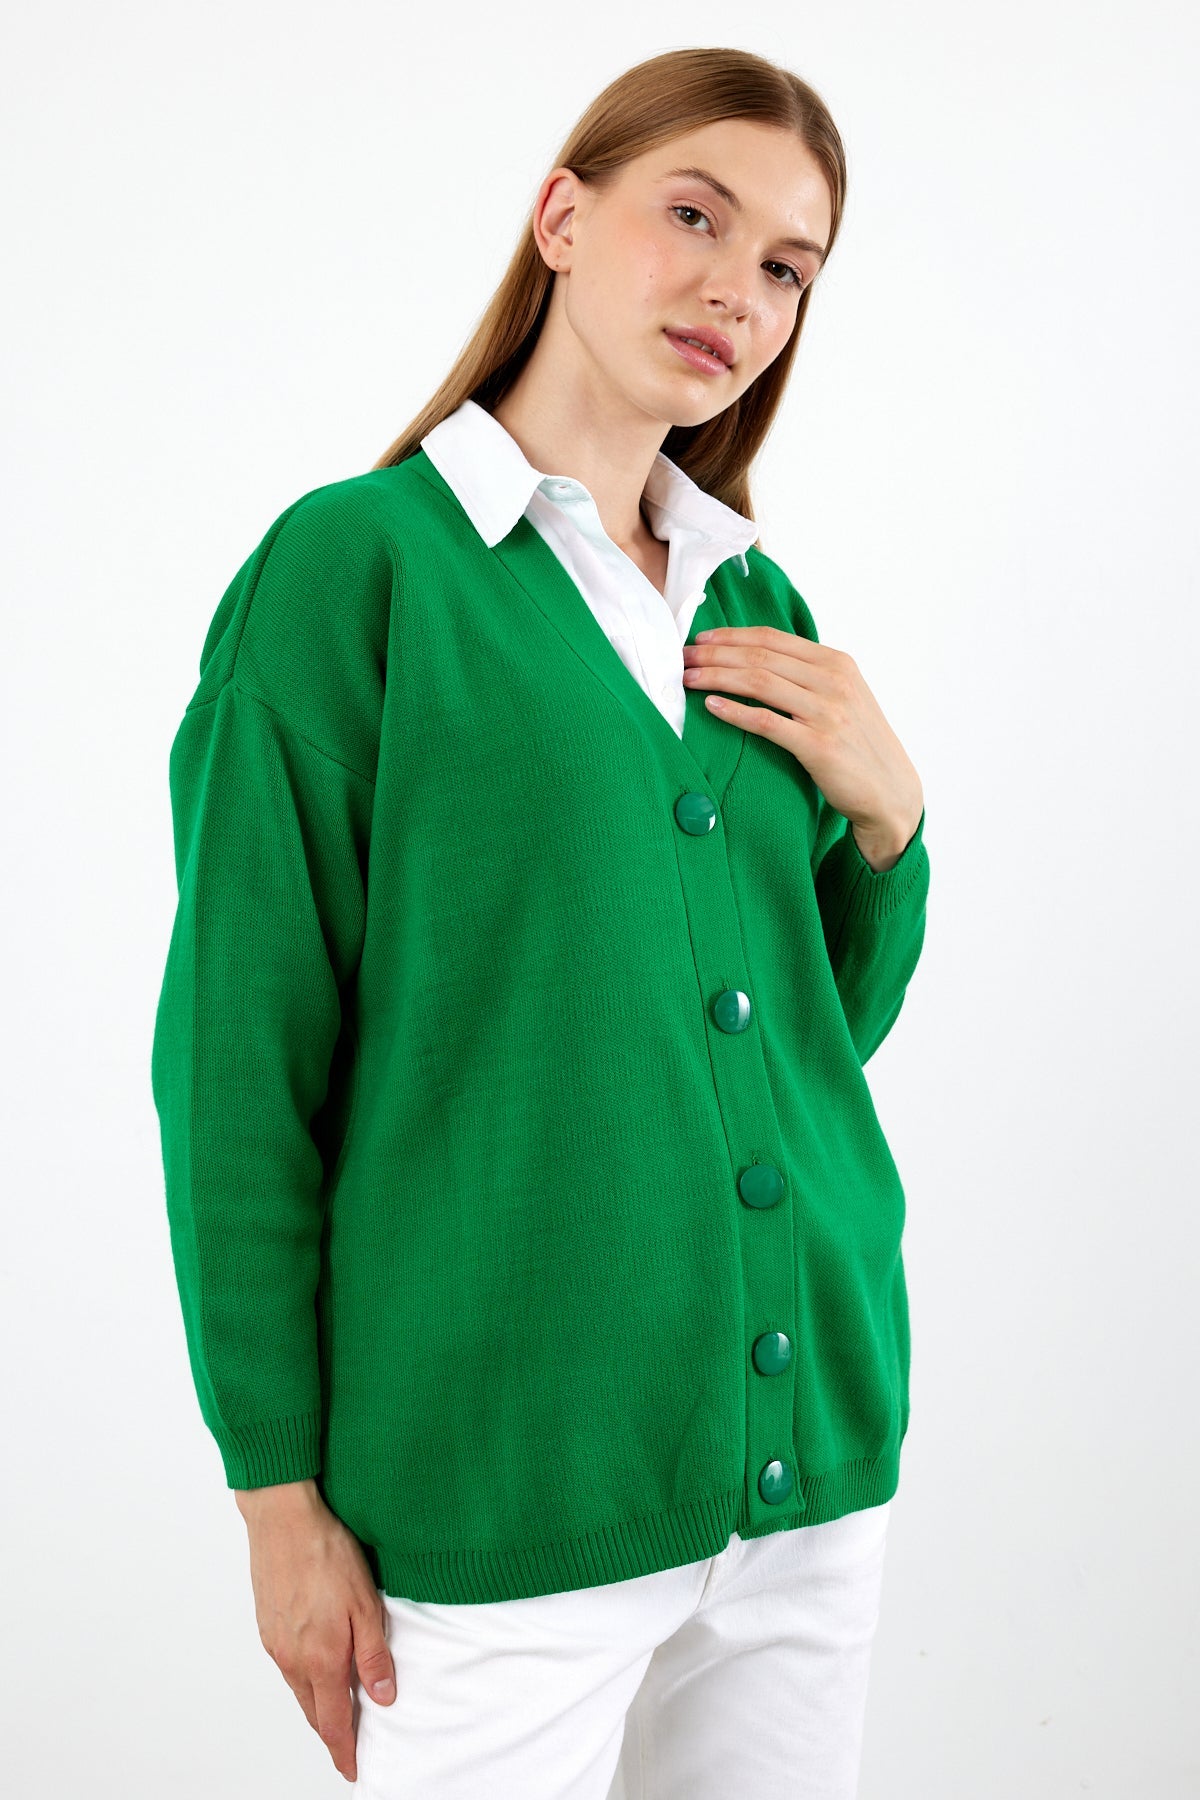 Solid Color Knit Cardigan Mid Length - SKU: 1254